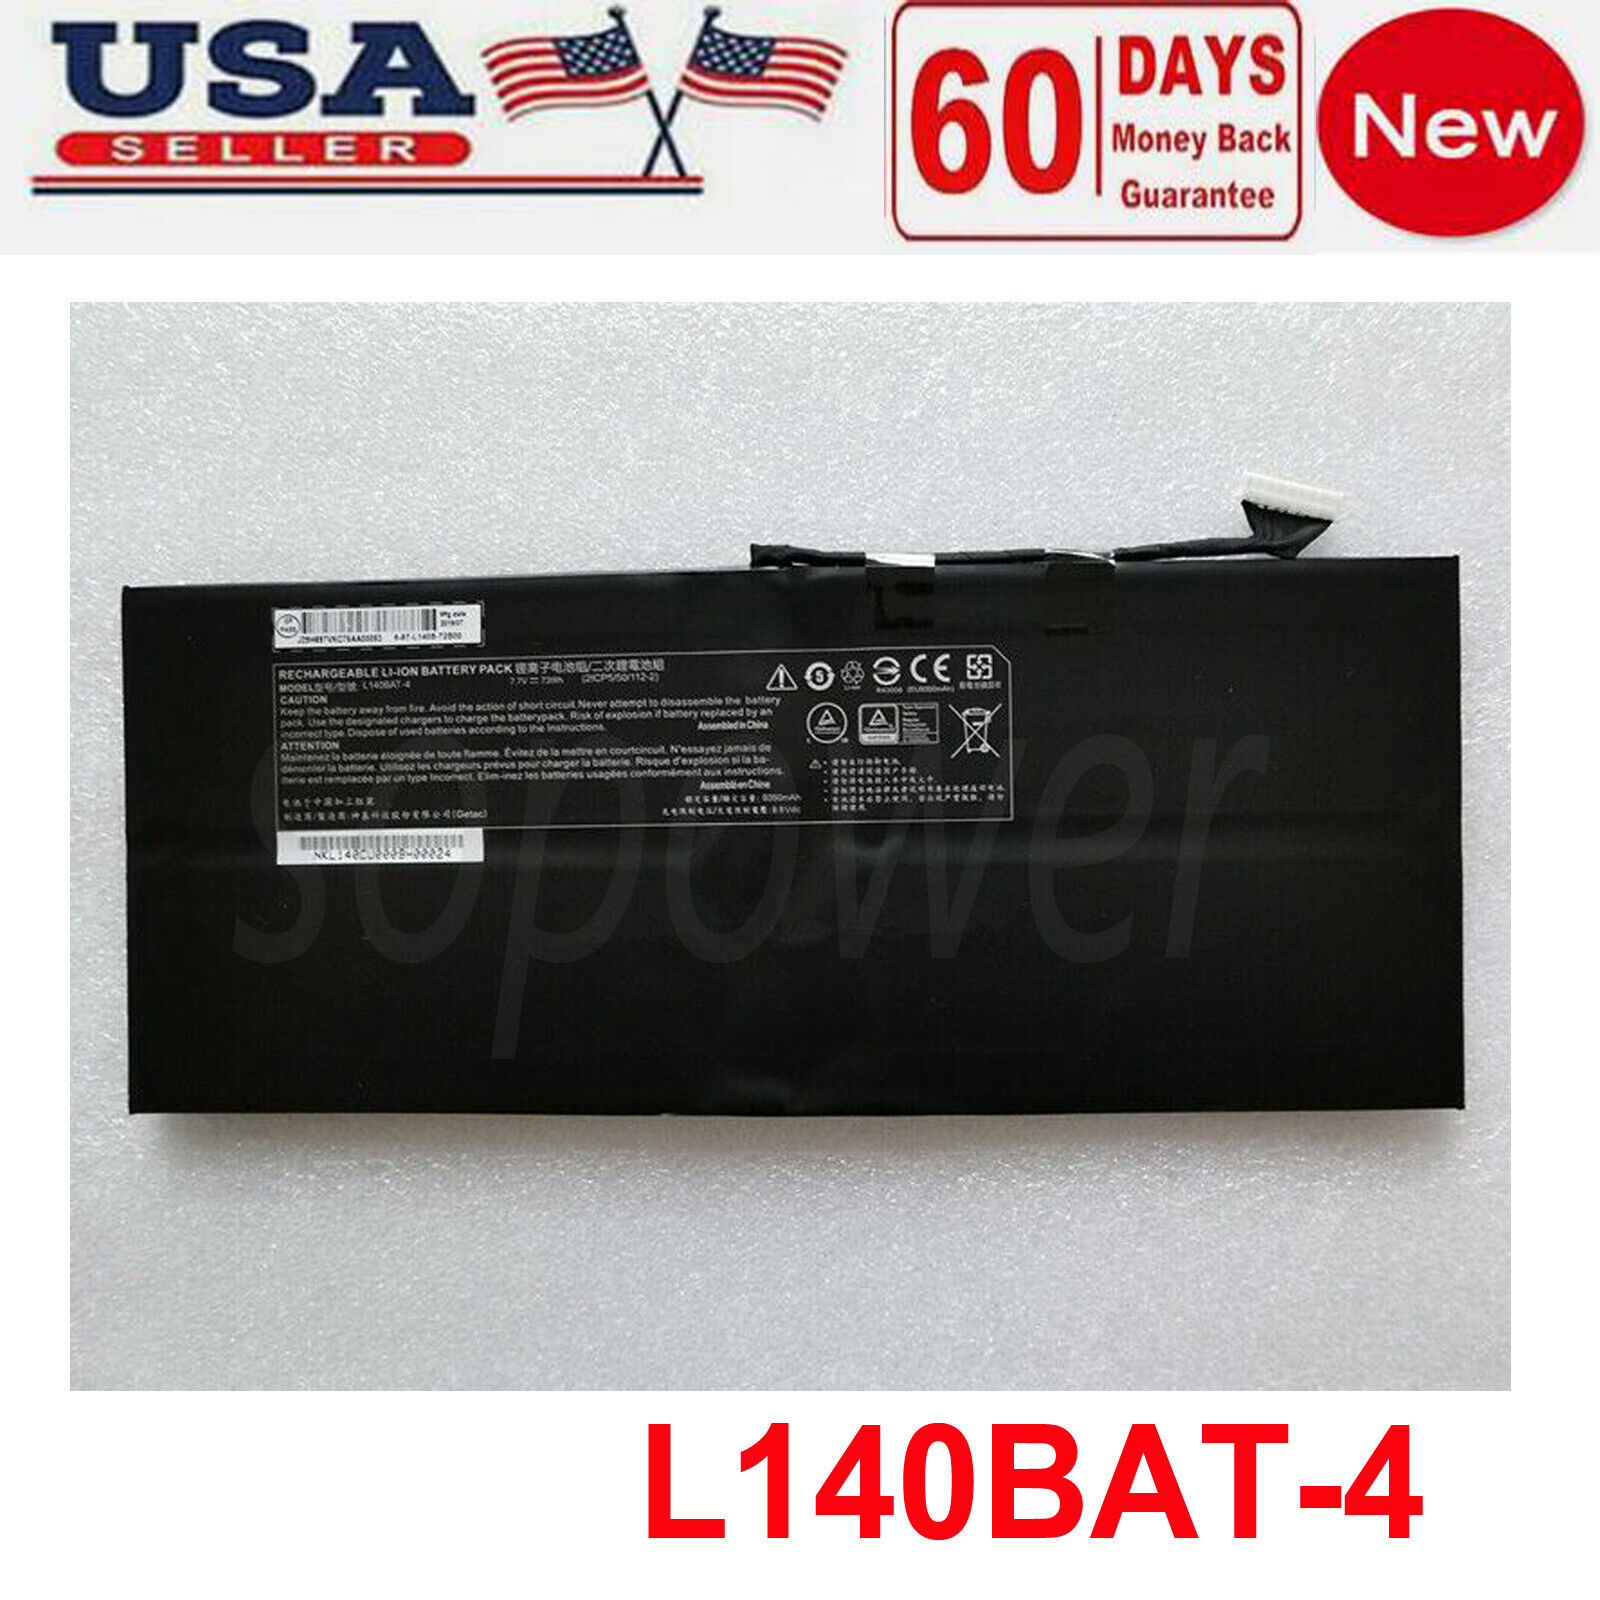 L140BAT-4 6-87-L140S-72B01 battery for Clevo Lemp9 System76 Pro 2021